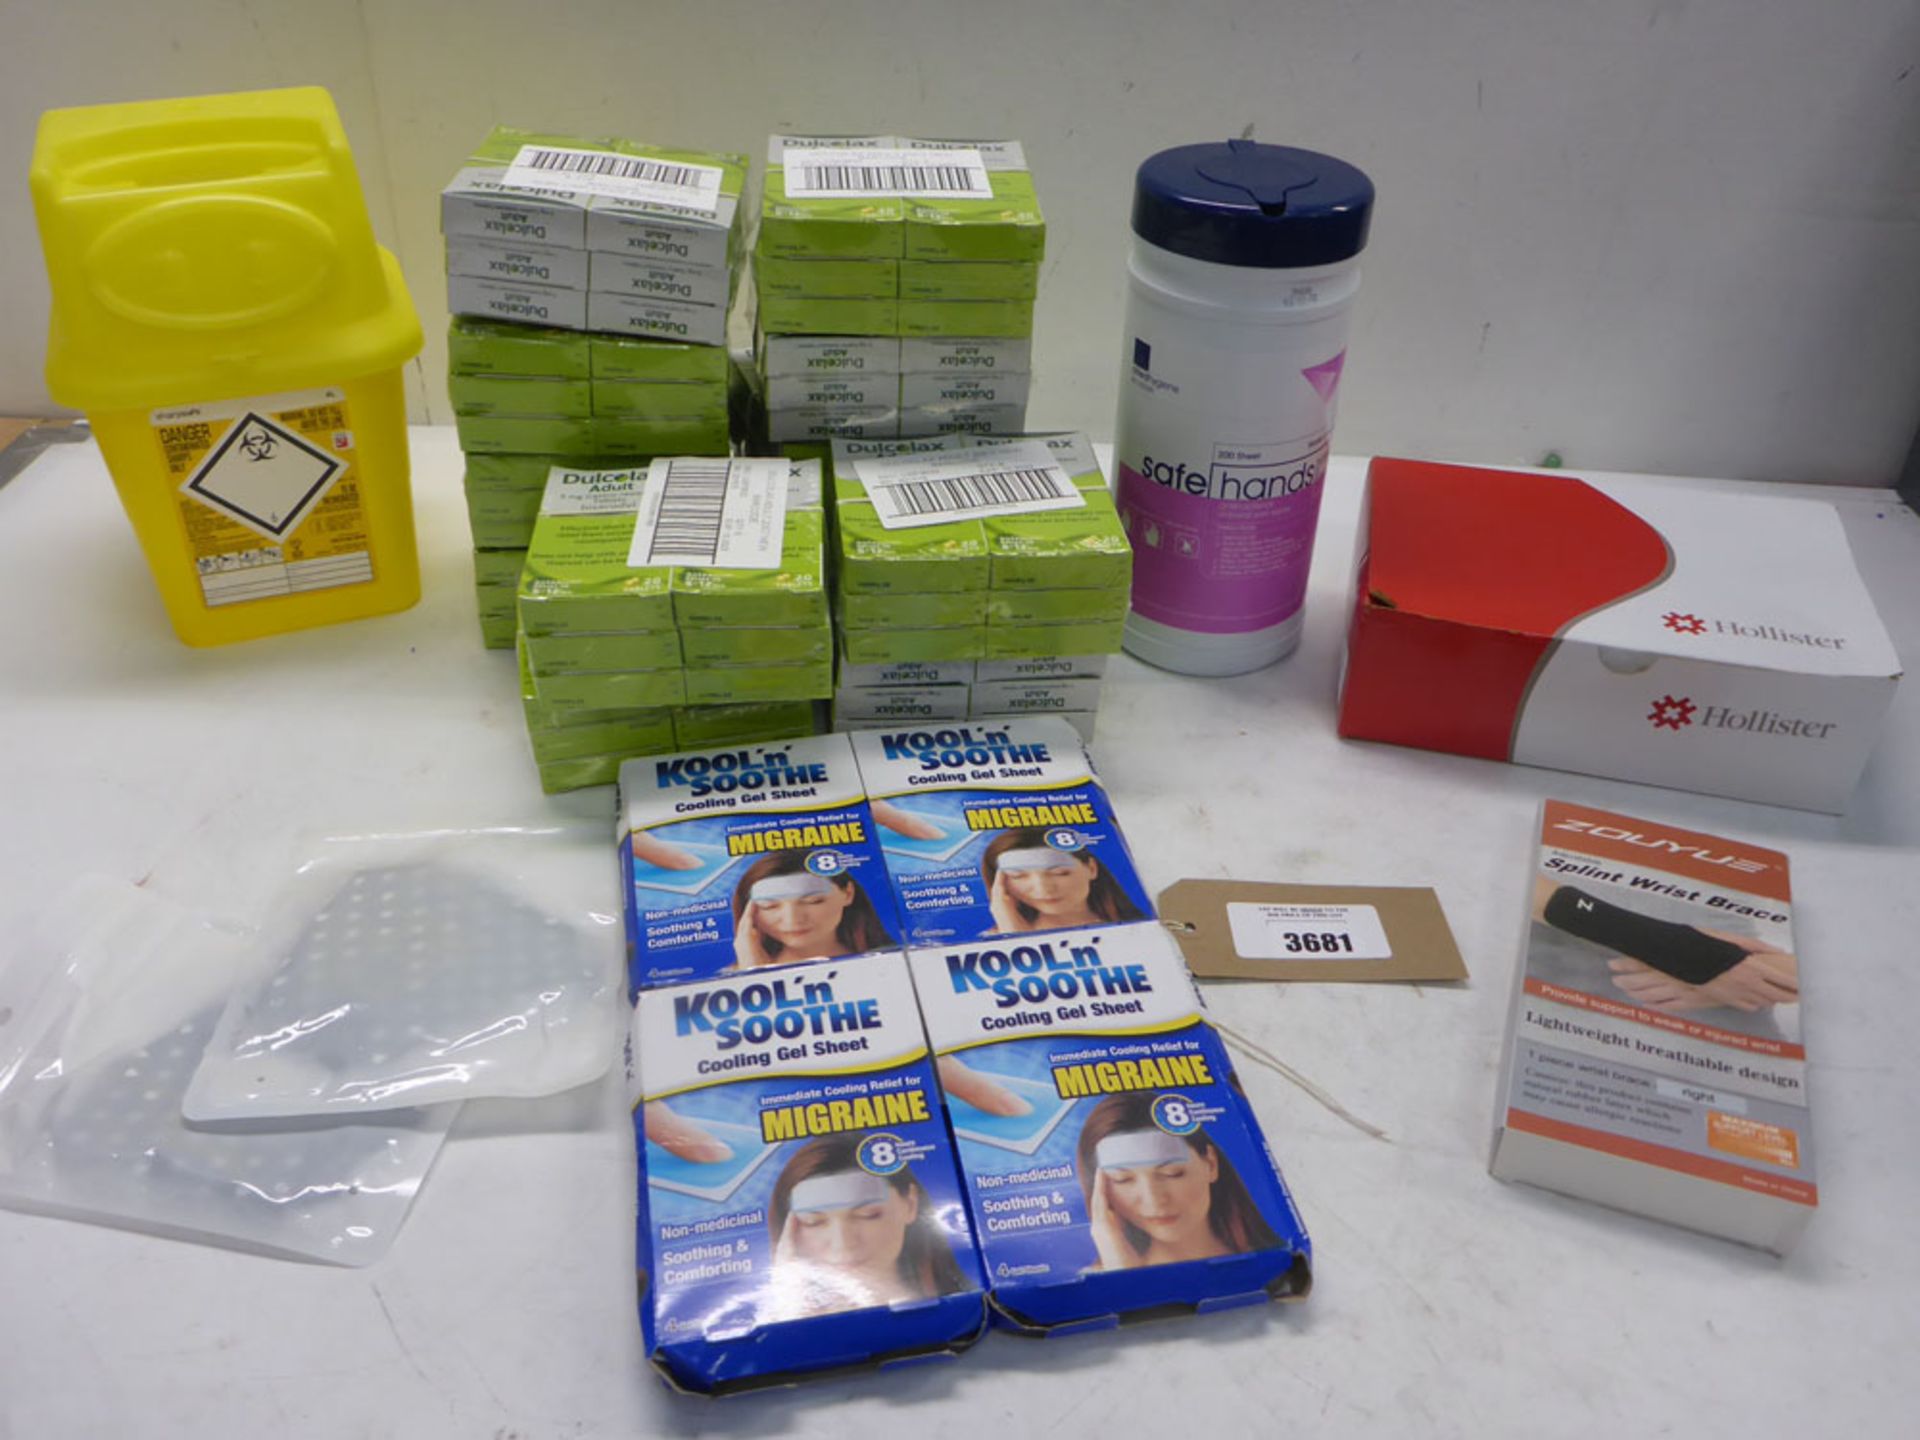 72 packs of Dulcolax Adult tablets Exp 10/2023, Splint wrist brace, Migraine cooling gel sheets